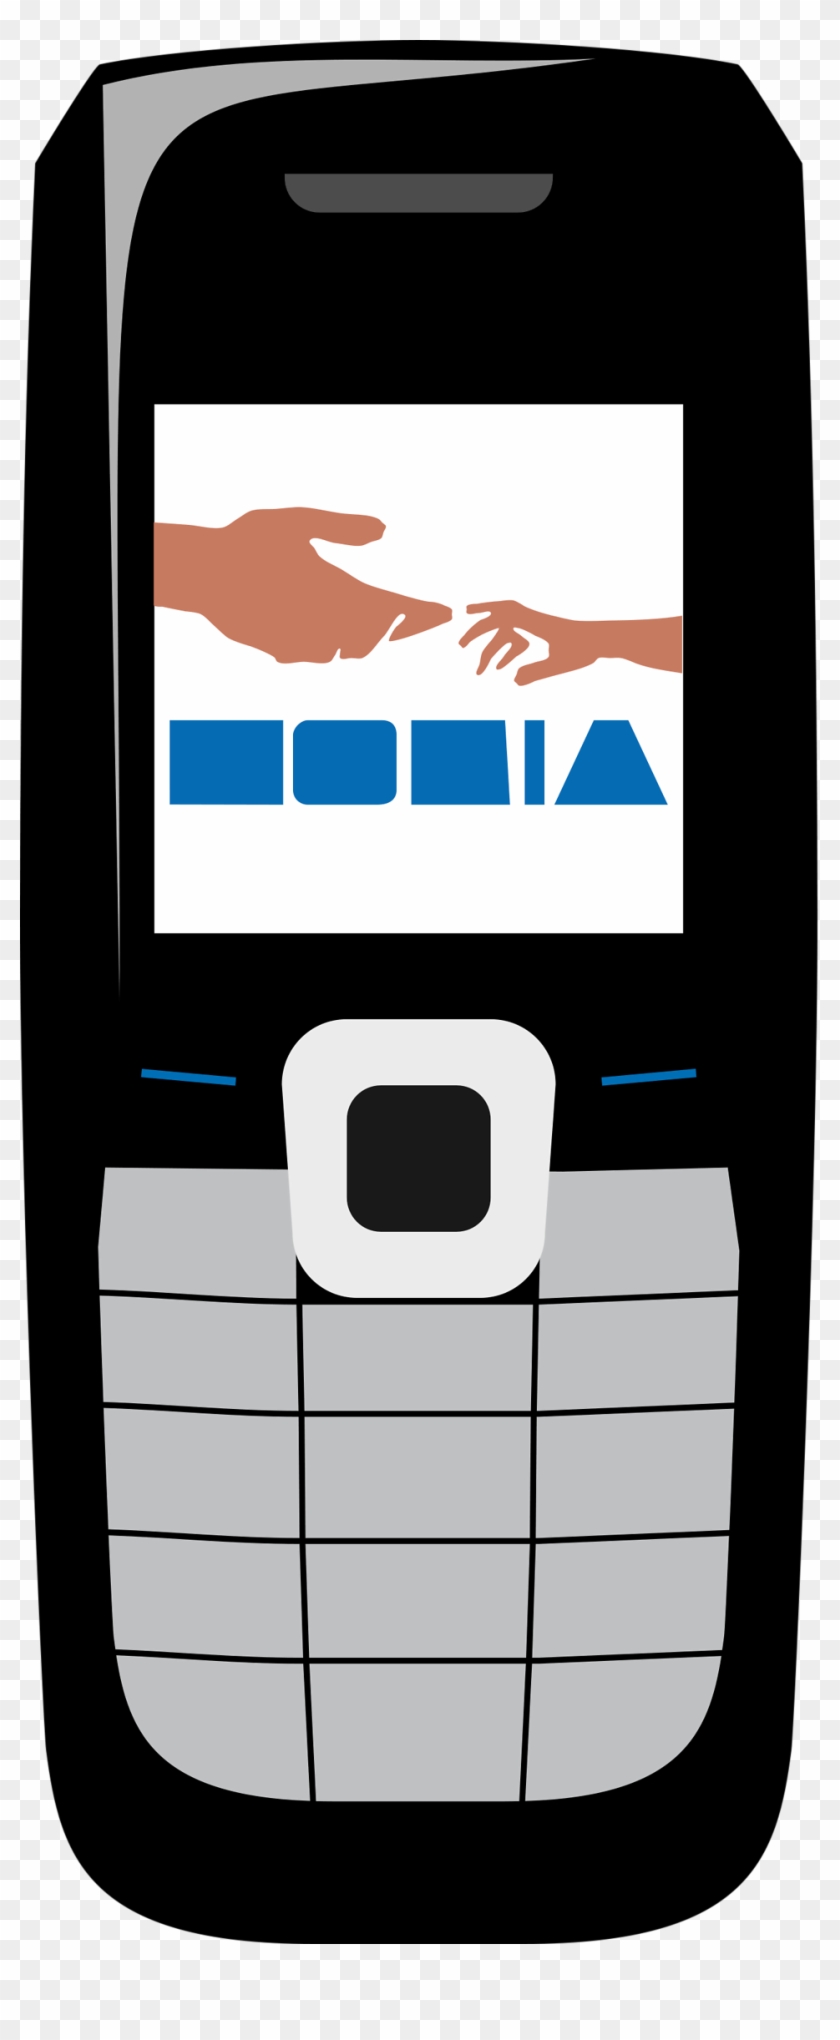 Phone Texting Symbols - Nokia Phone Vector #1632467